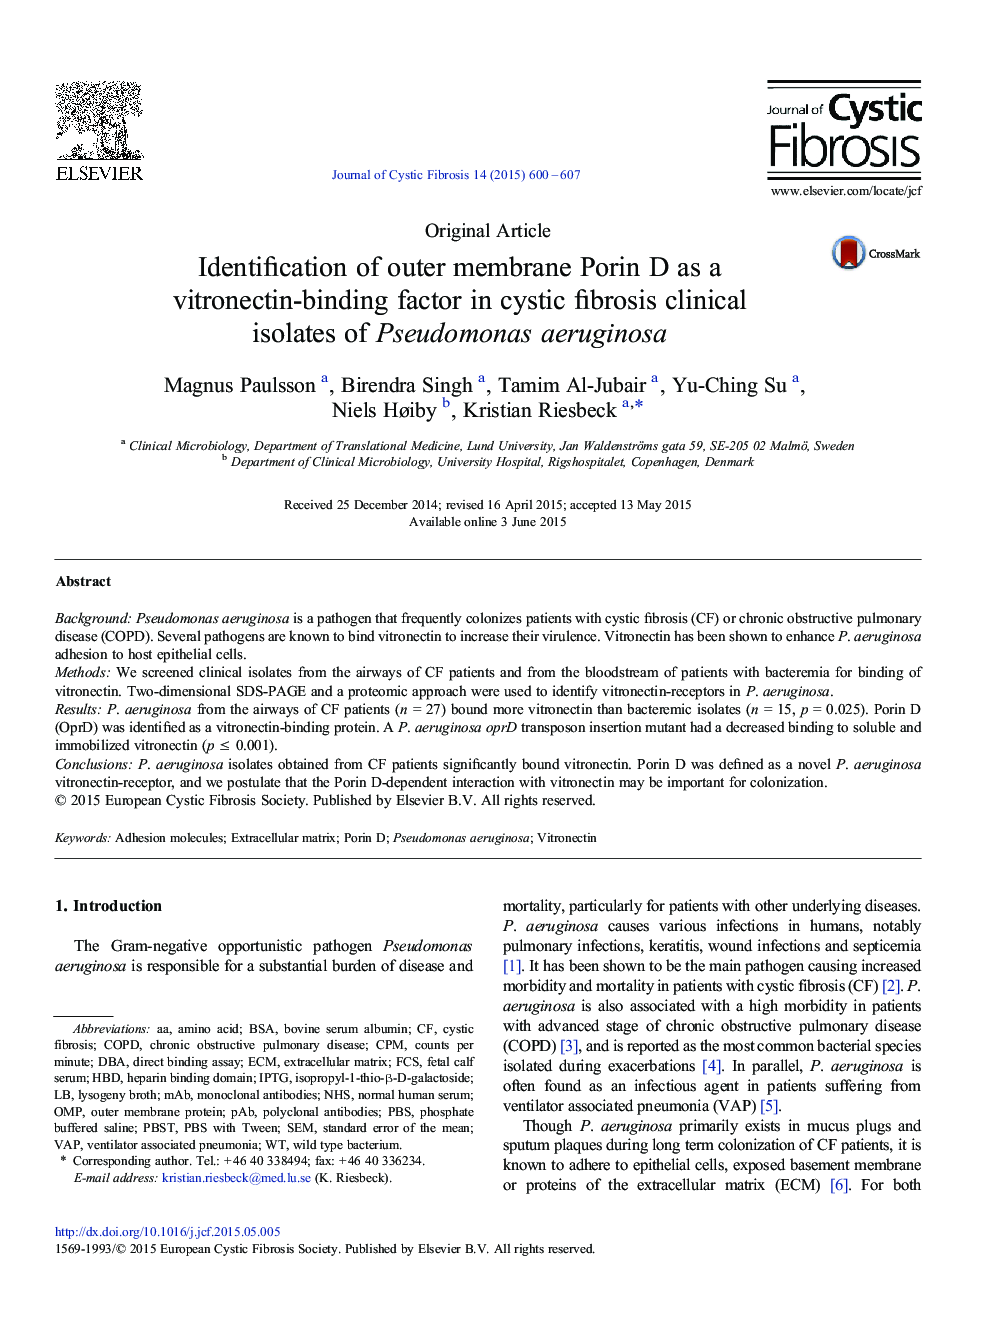 Identification of outer membrane Porin D as a vitronectin-binding factor in cystic fibrosis clinical isolates of Pseudomonas aeruginosa